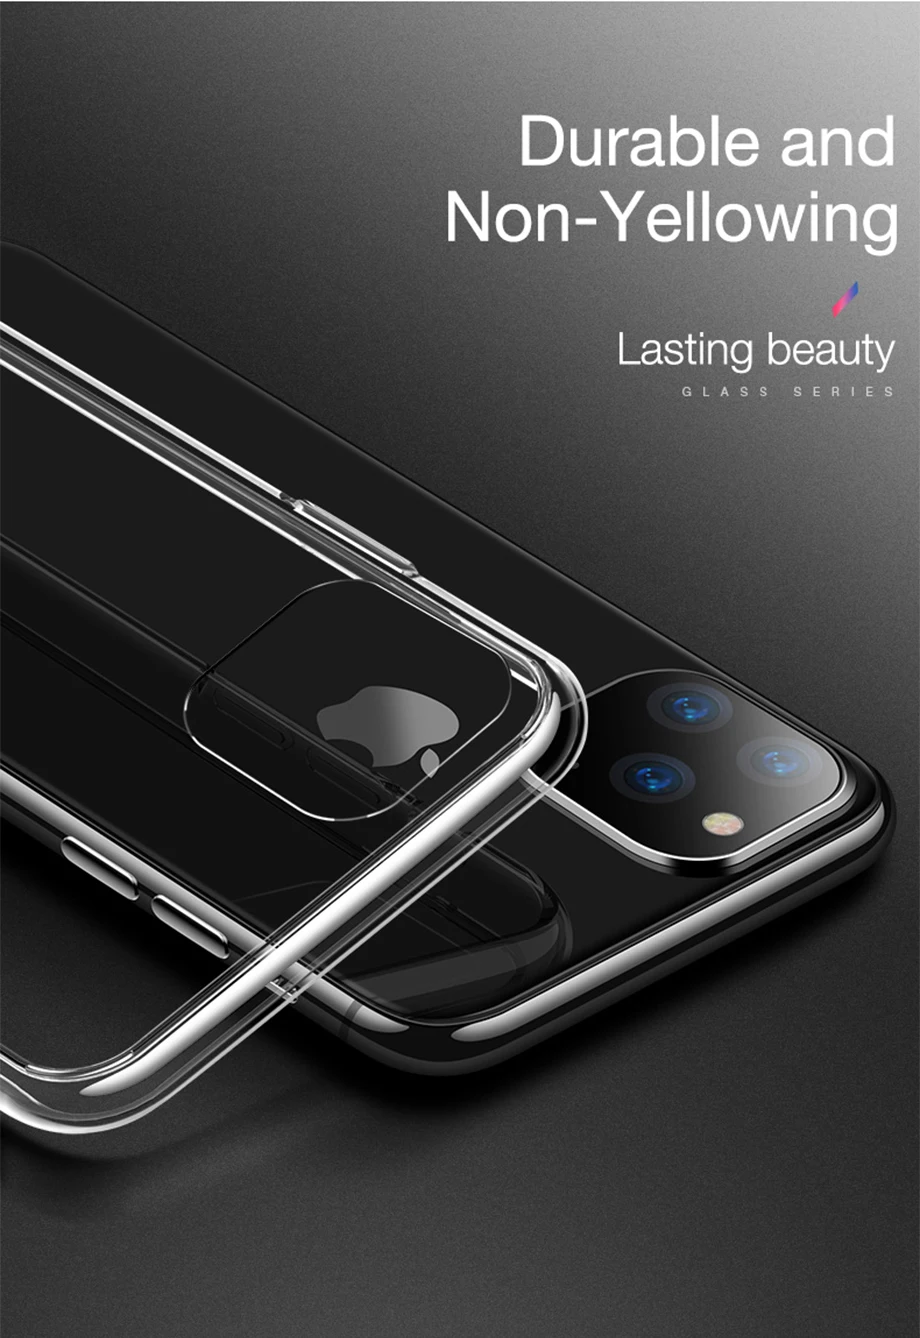 Lovebay чехол прозрачный мягкий чехол для телефона для iPhone 11 XS X XR 11 Pro XS Max Clear Fundas для iPhone 8, 7, 6 6s плюс силиконовый чехол из ТПУ